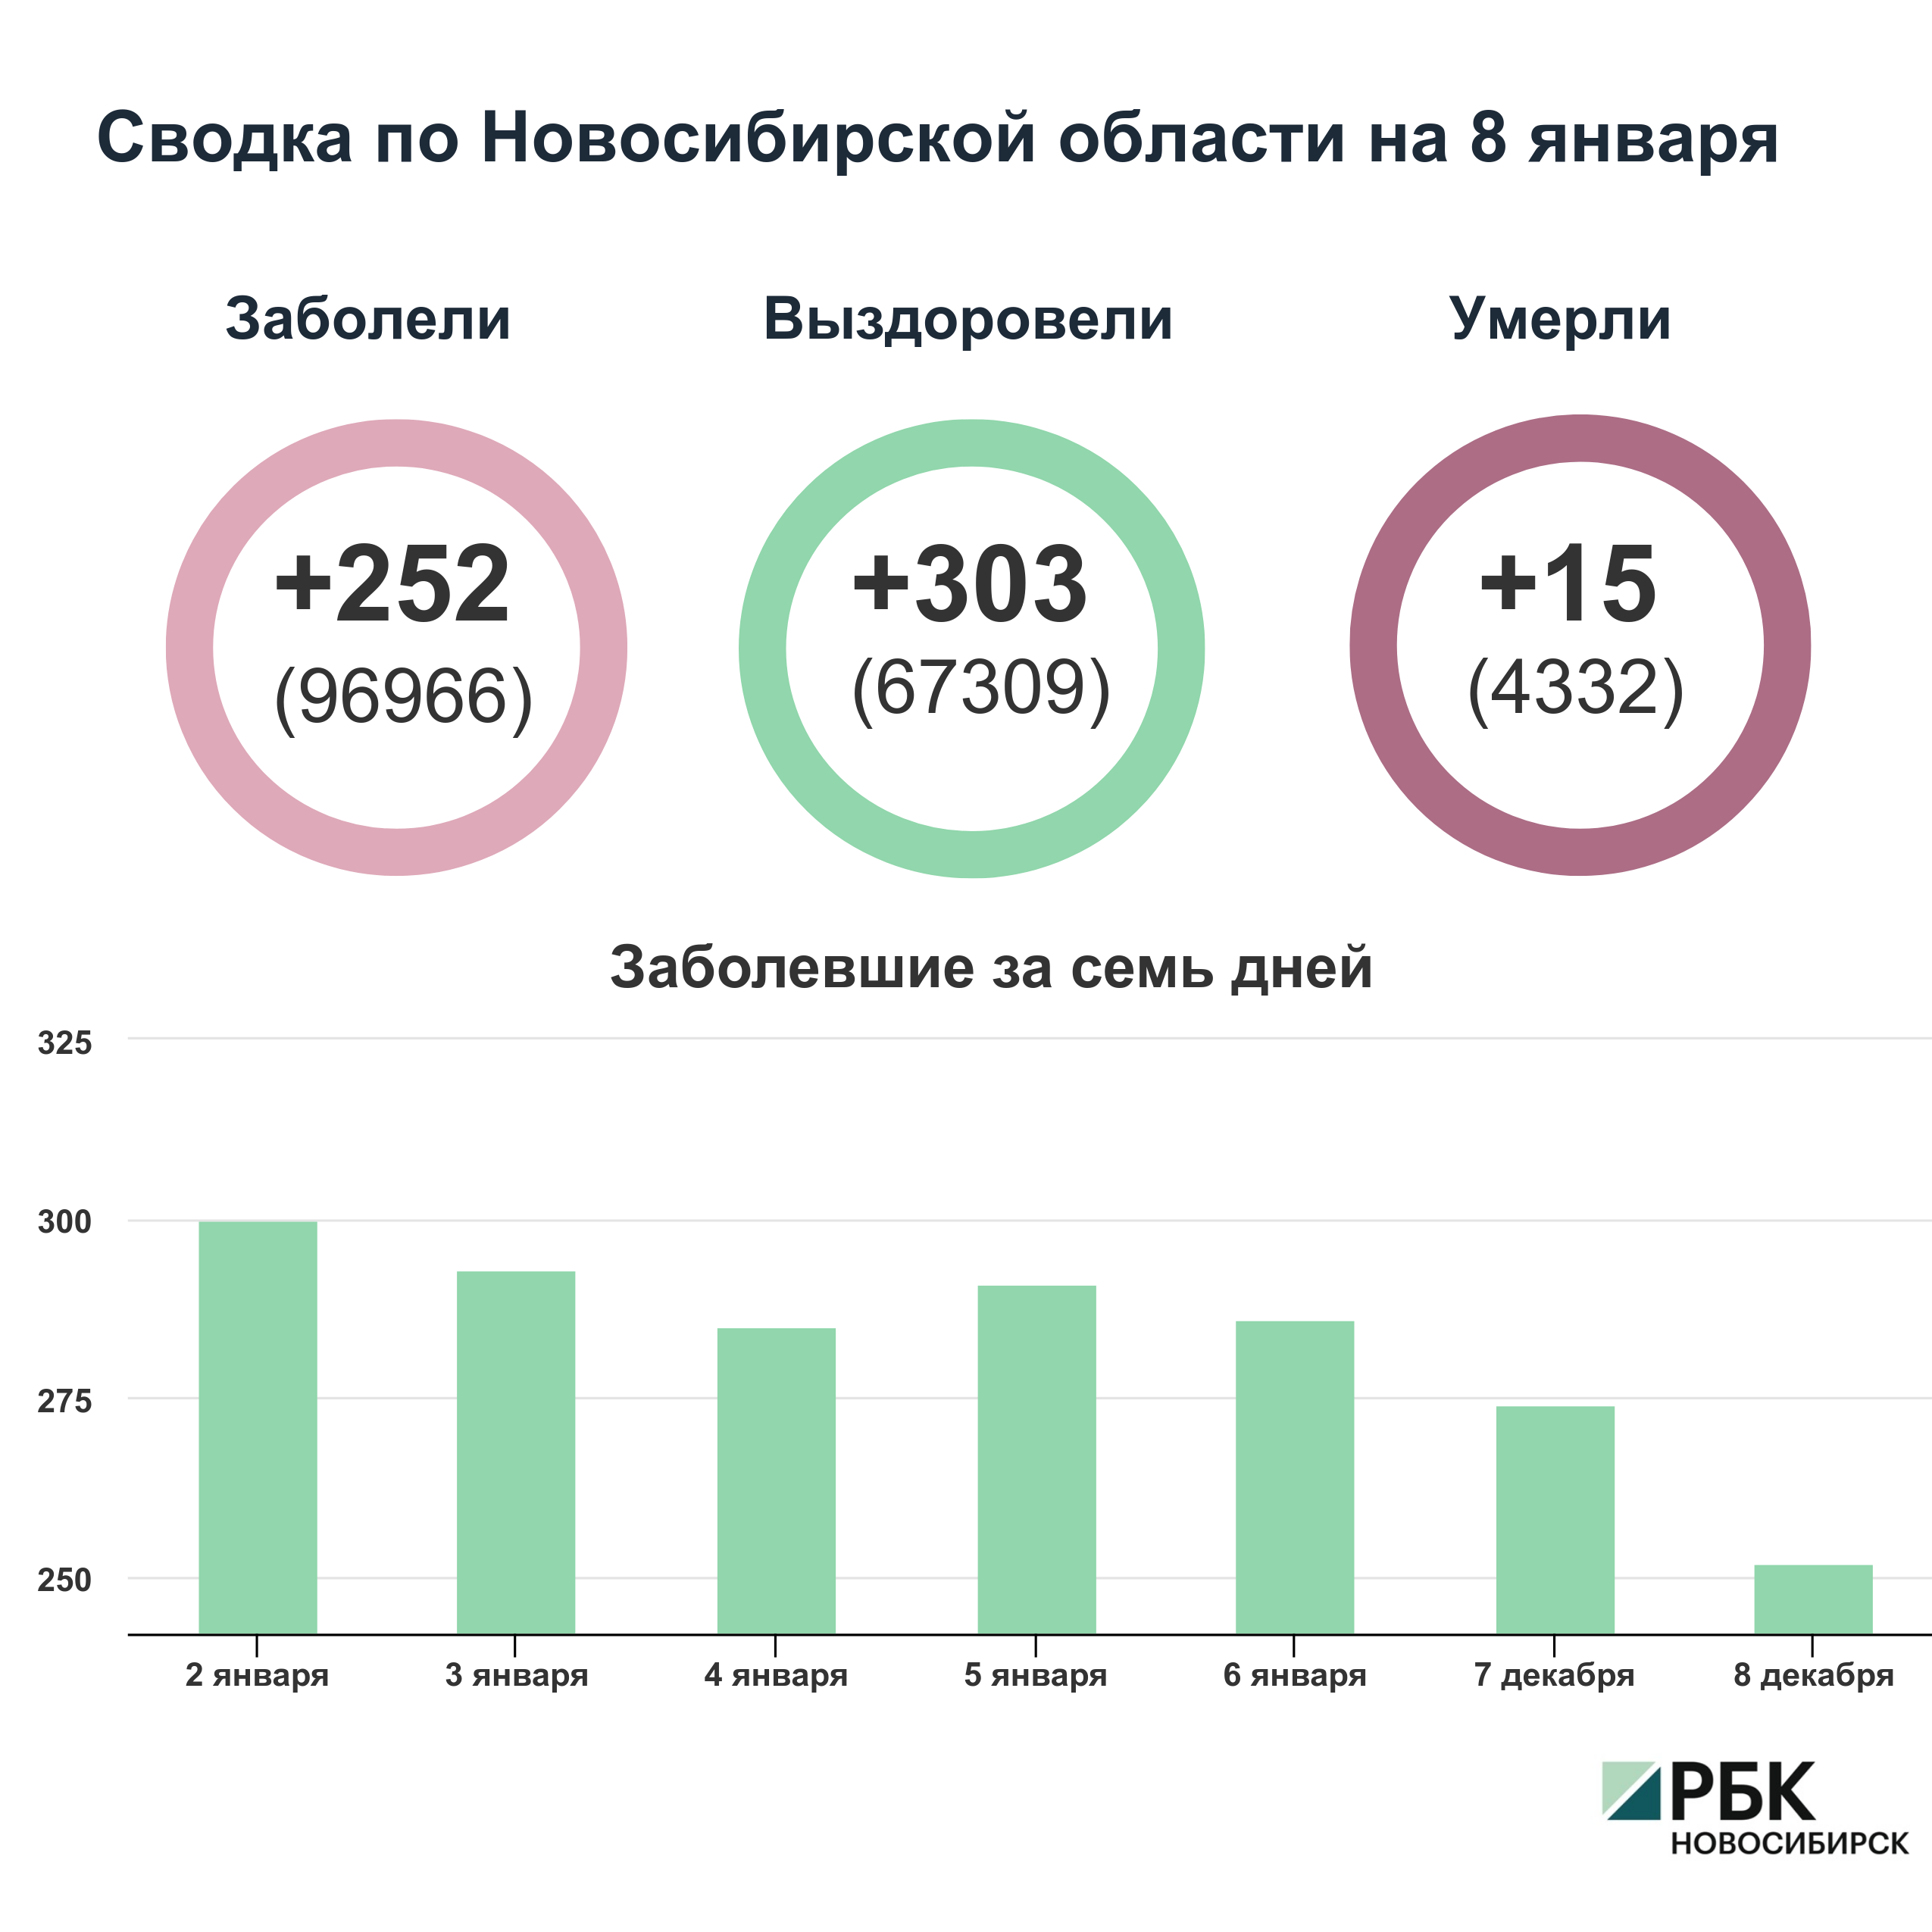 Коронавирус в Новосибирске: сводка на 8 января